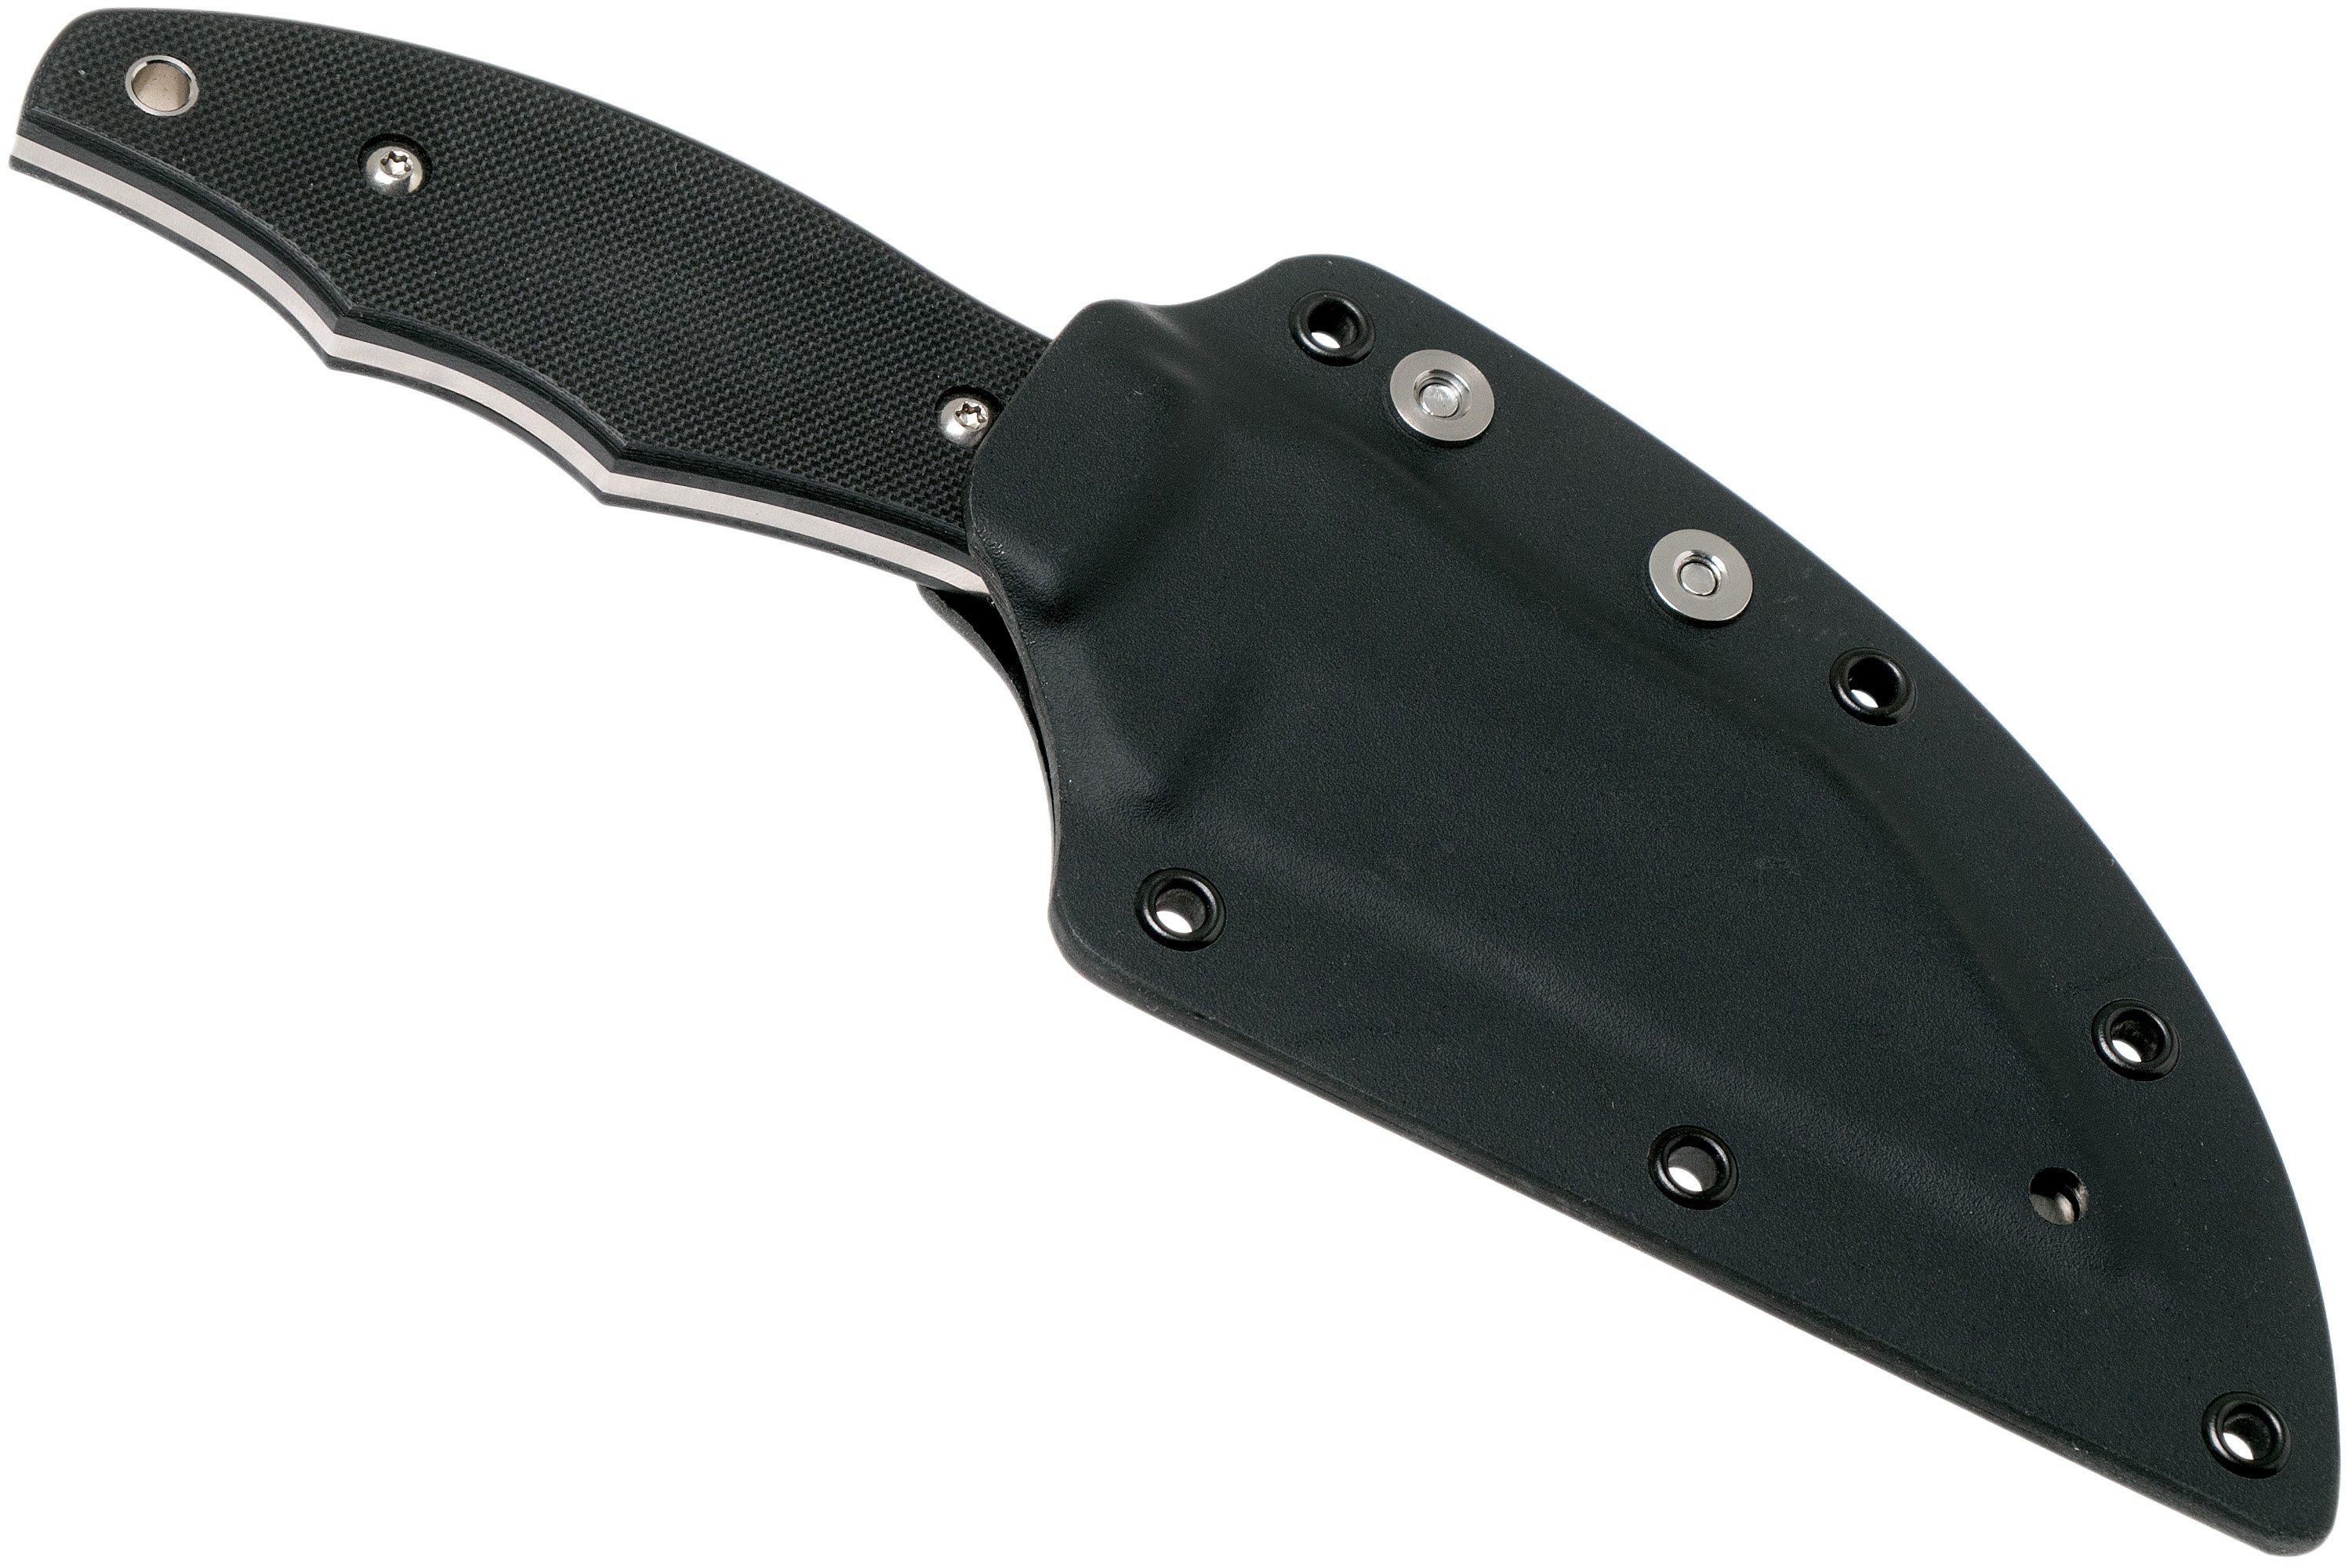 Spyderco Ronin 2 FB09GP2 fixed knife | Advantageously shopping at ...